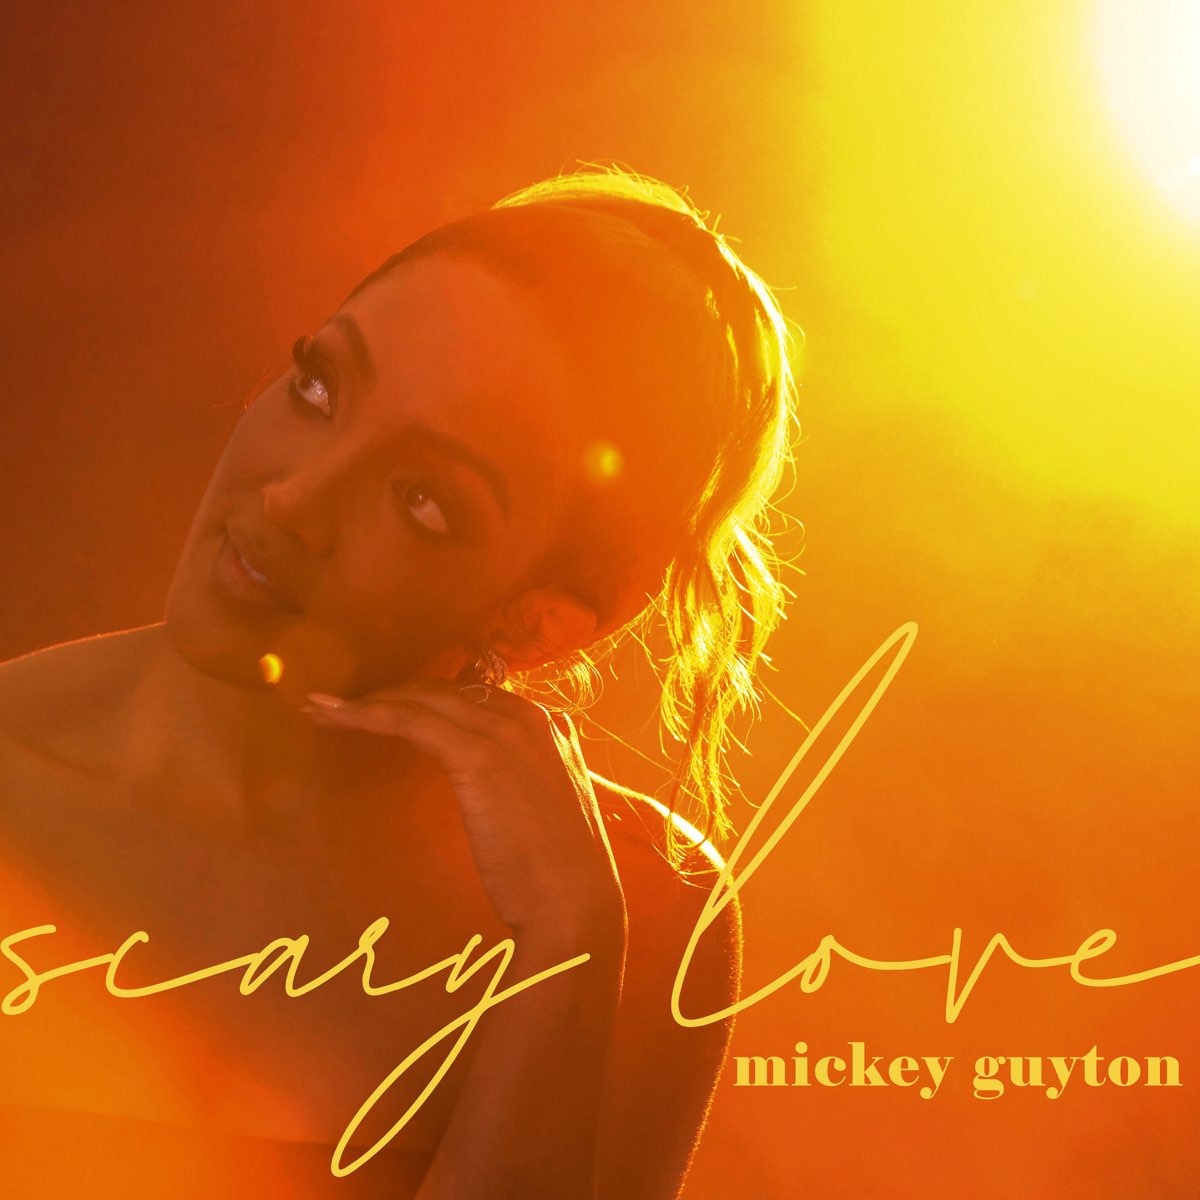 Mickey Guyton (@MickeyGuyton) - 'Scary Love' atrl.net/forums/topic/4… #ScaryLove